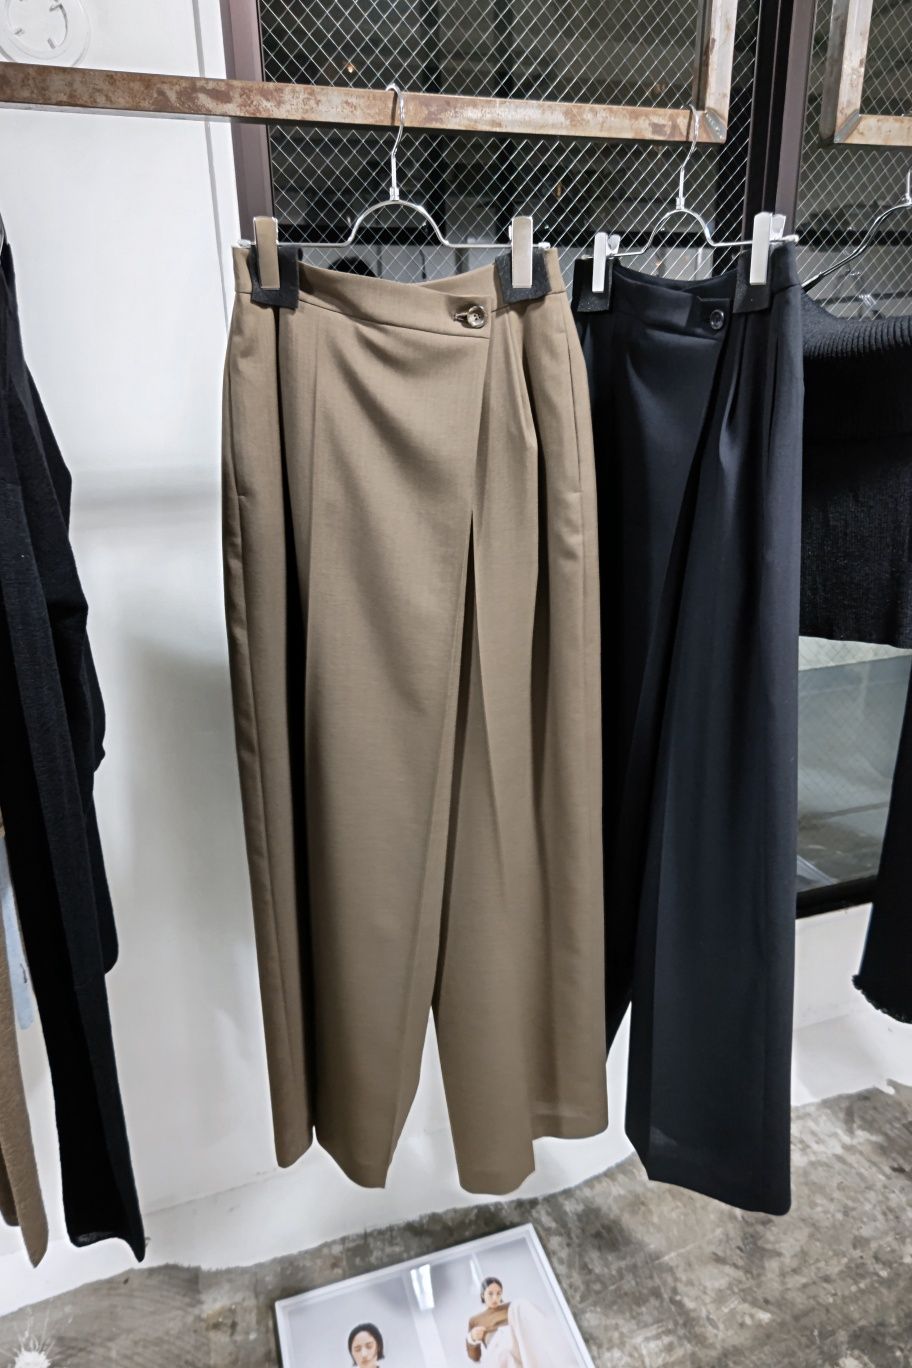 IIROT - Wool Cross pants -dark olive- 23fall | asterisk